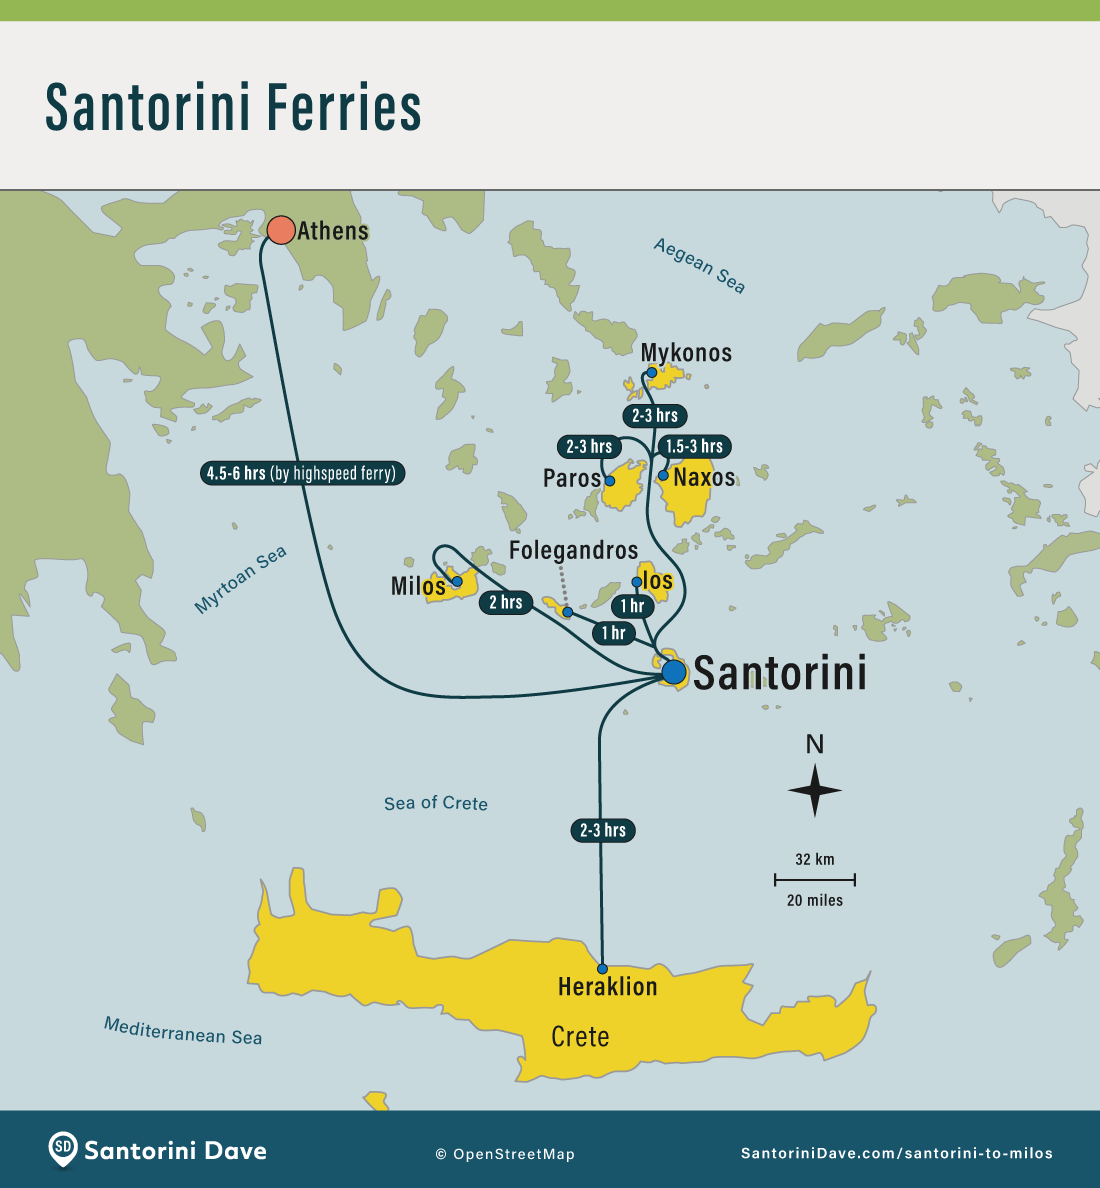 Santorini to Milos Ferry Times and Routes.